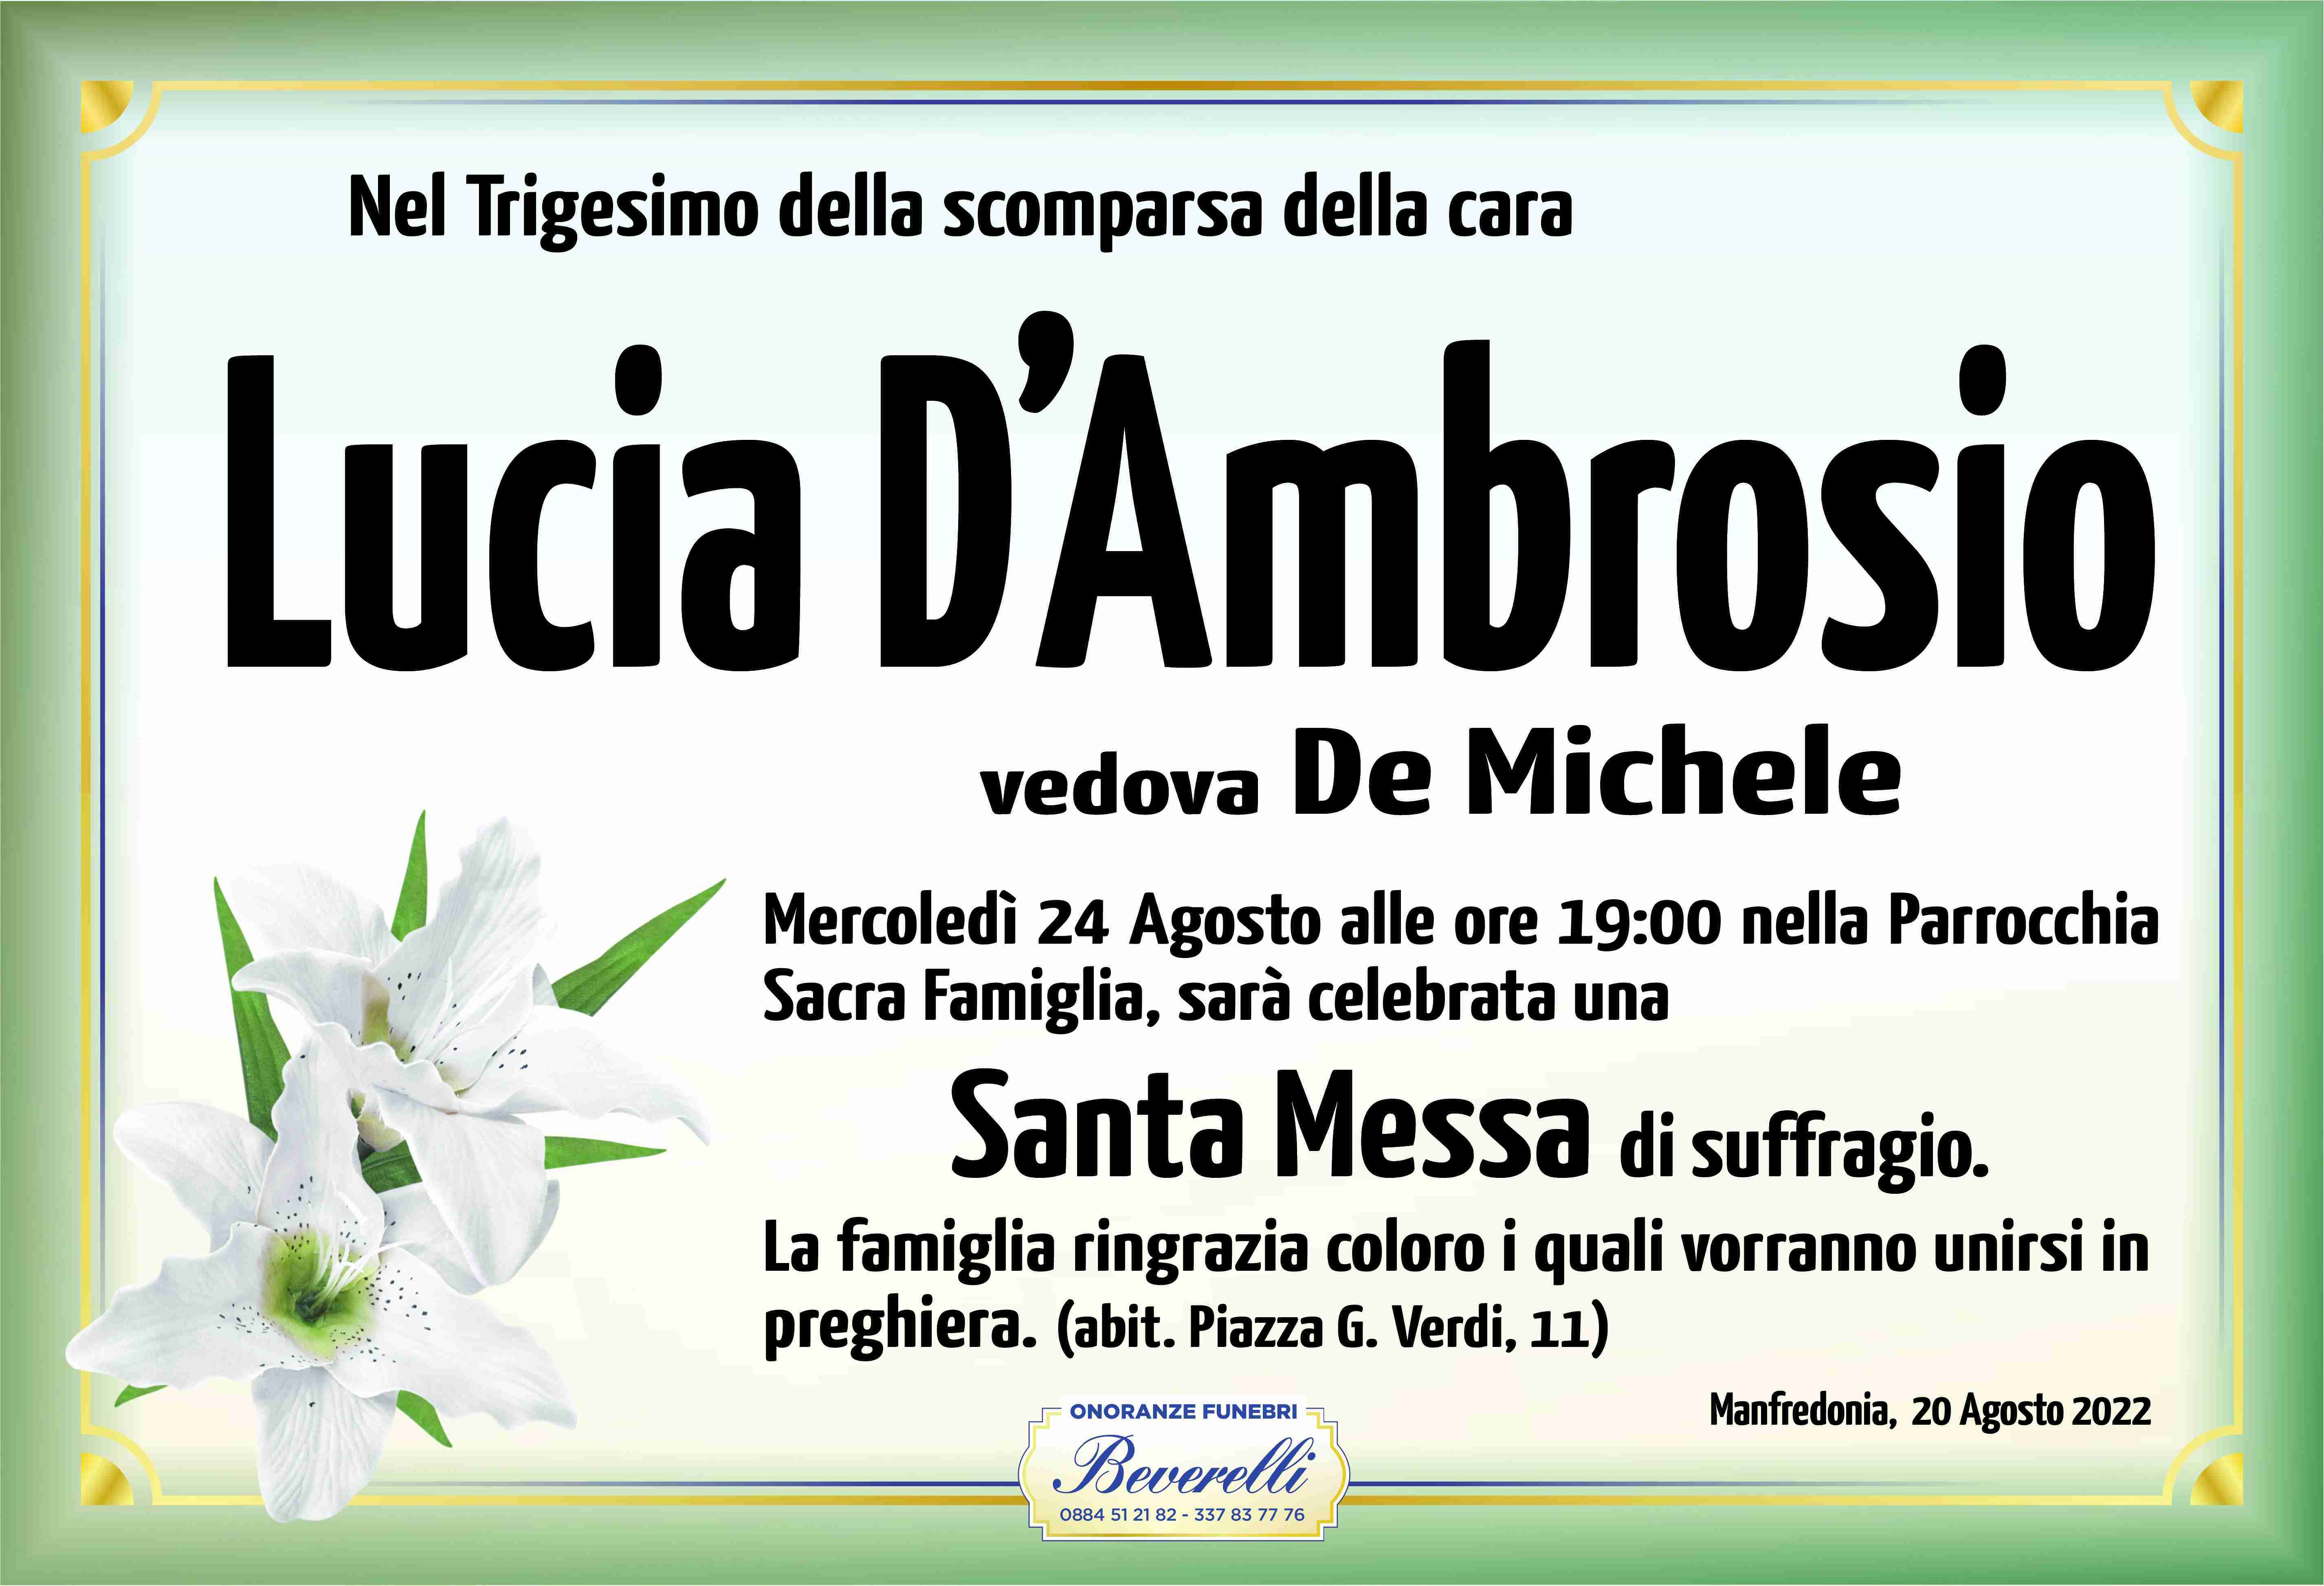 Lucia D'Ambrosio